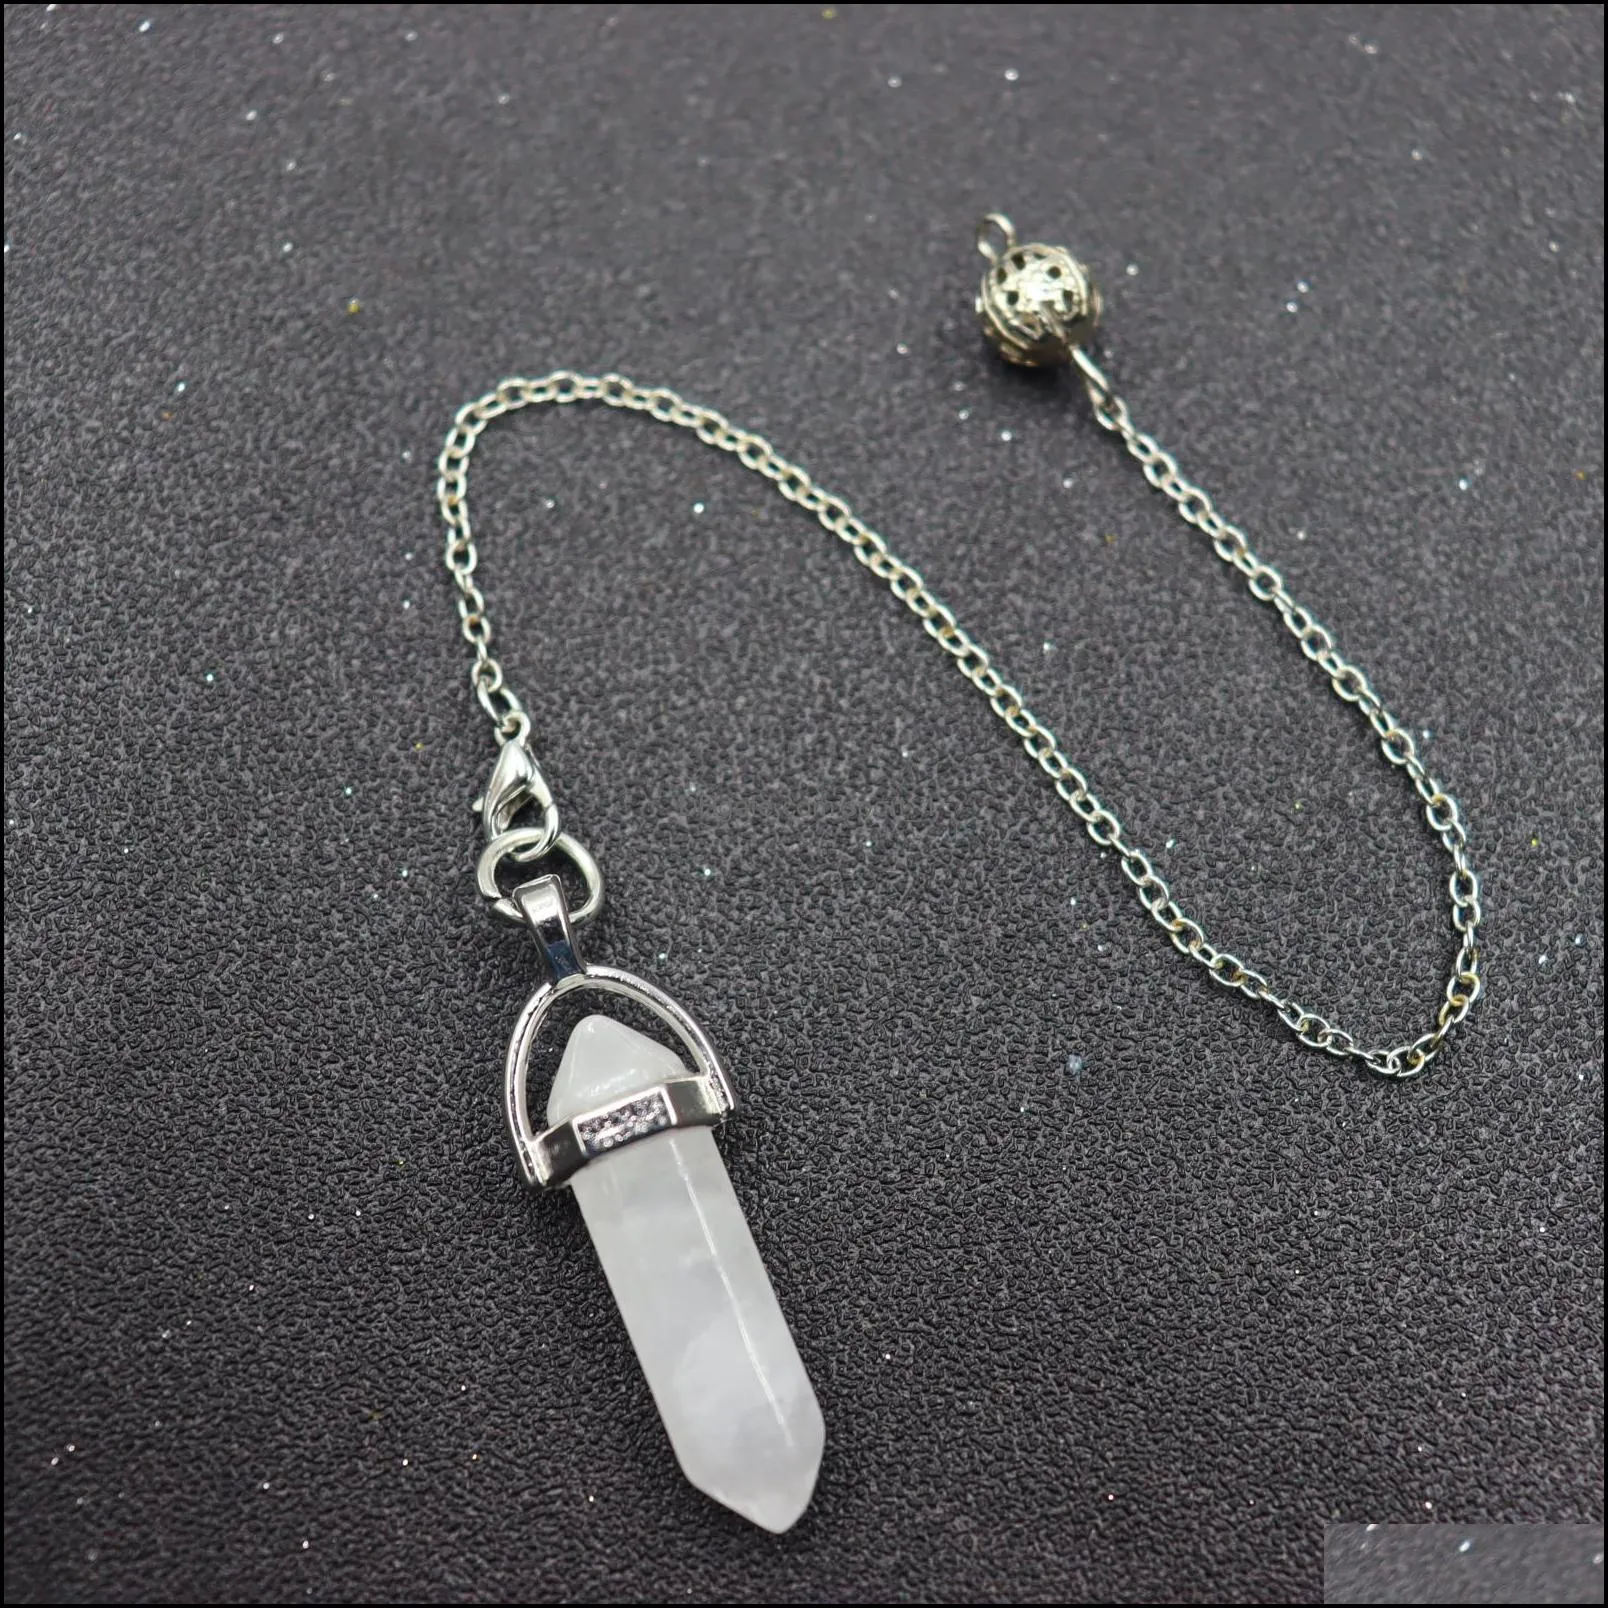 dowsing pendulum charms quartz hexagonal bullet shape natural stone crystal reiki healing pendule pendant pendulums for dowsin sport1